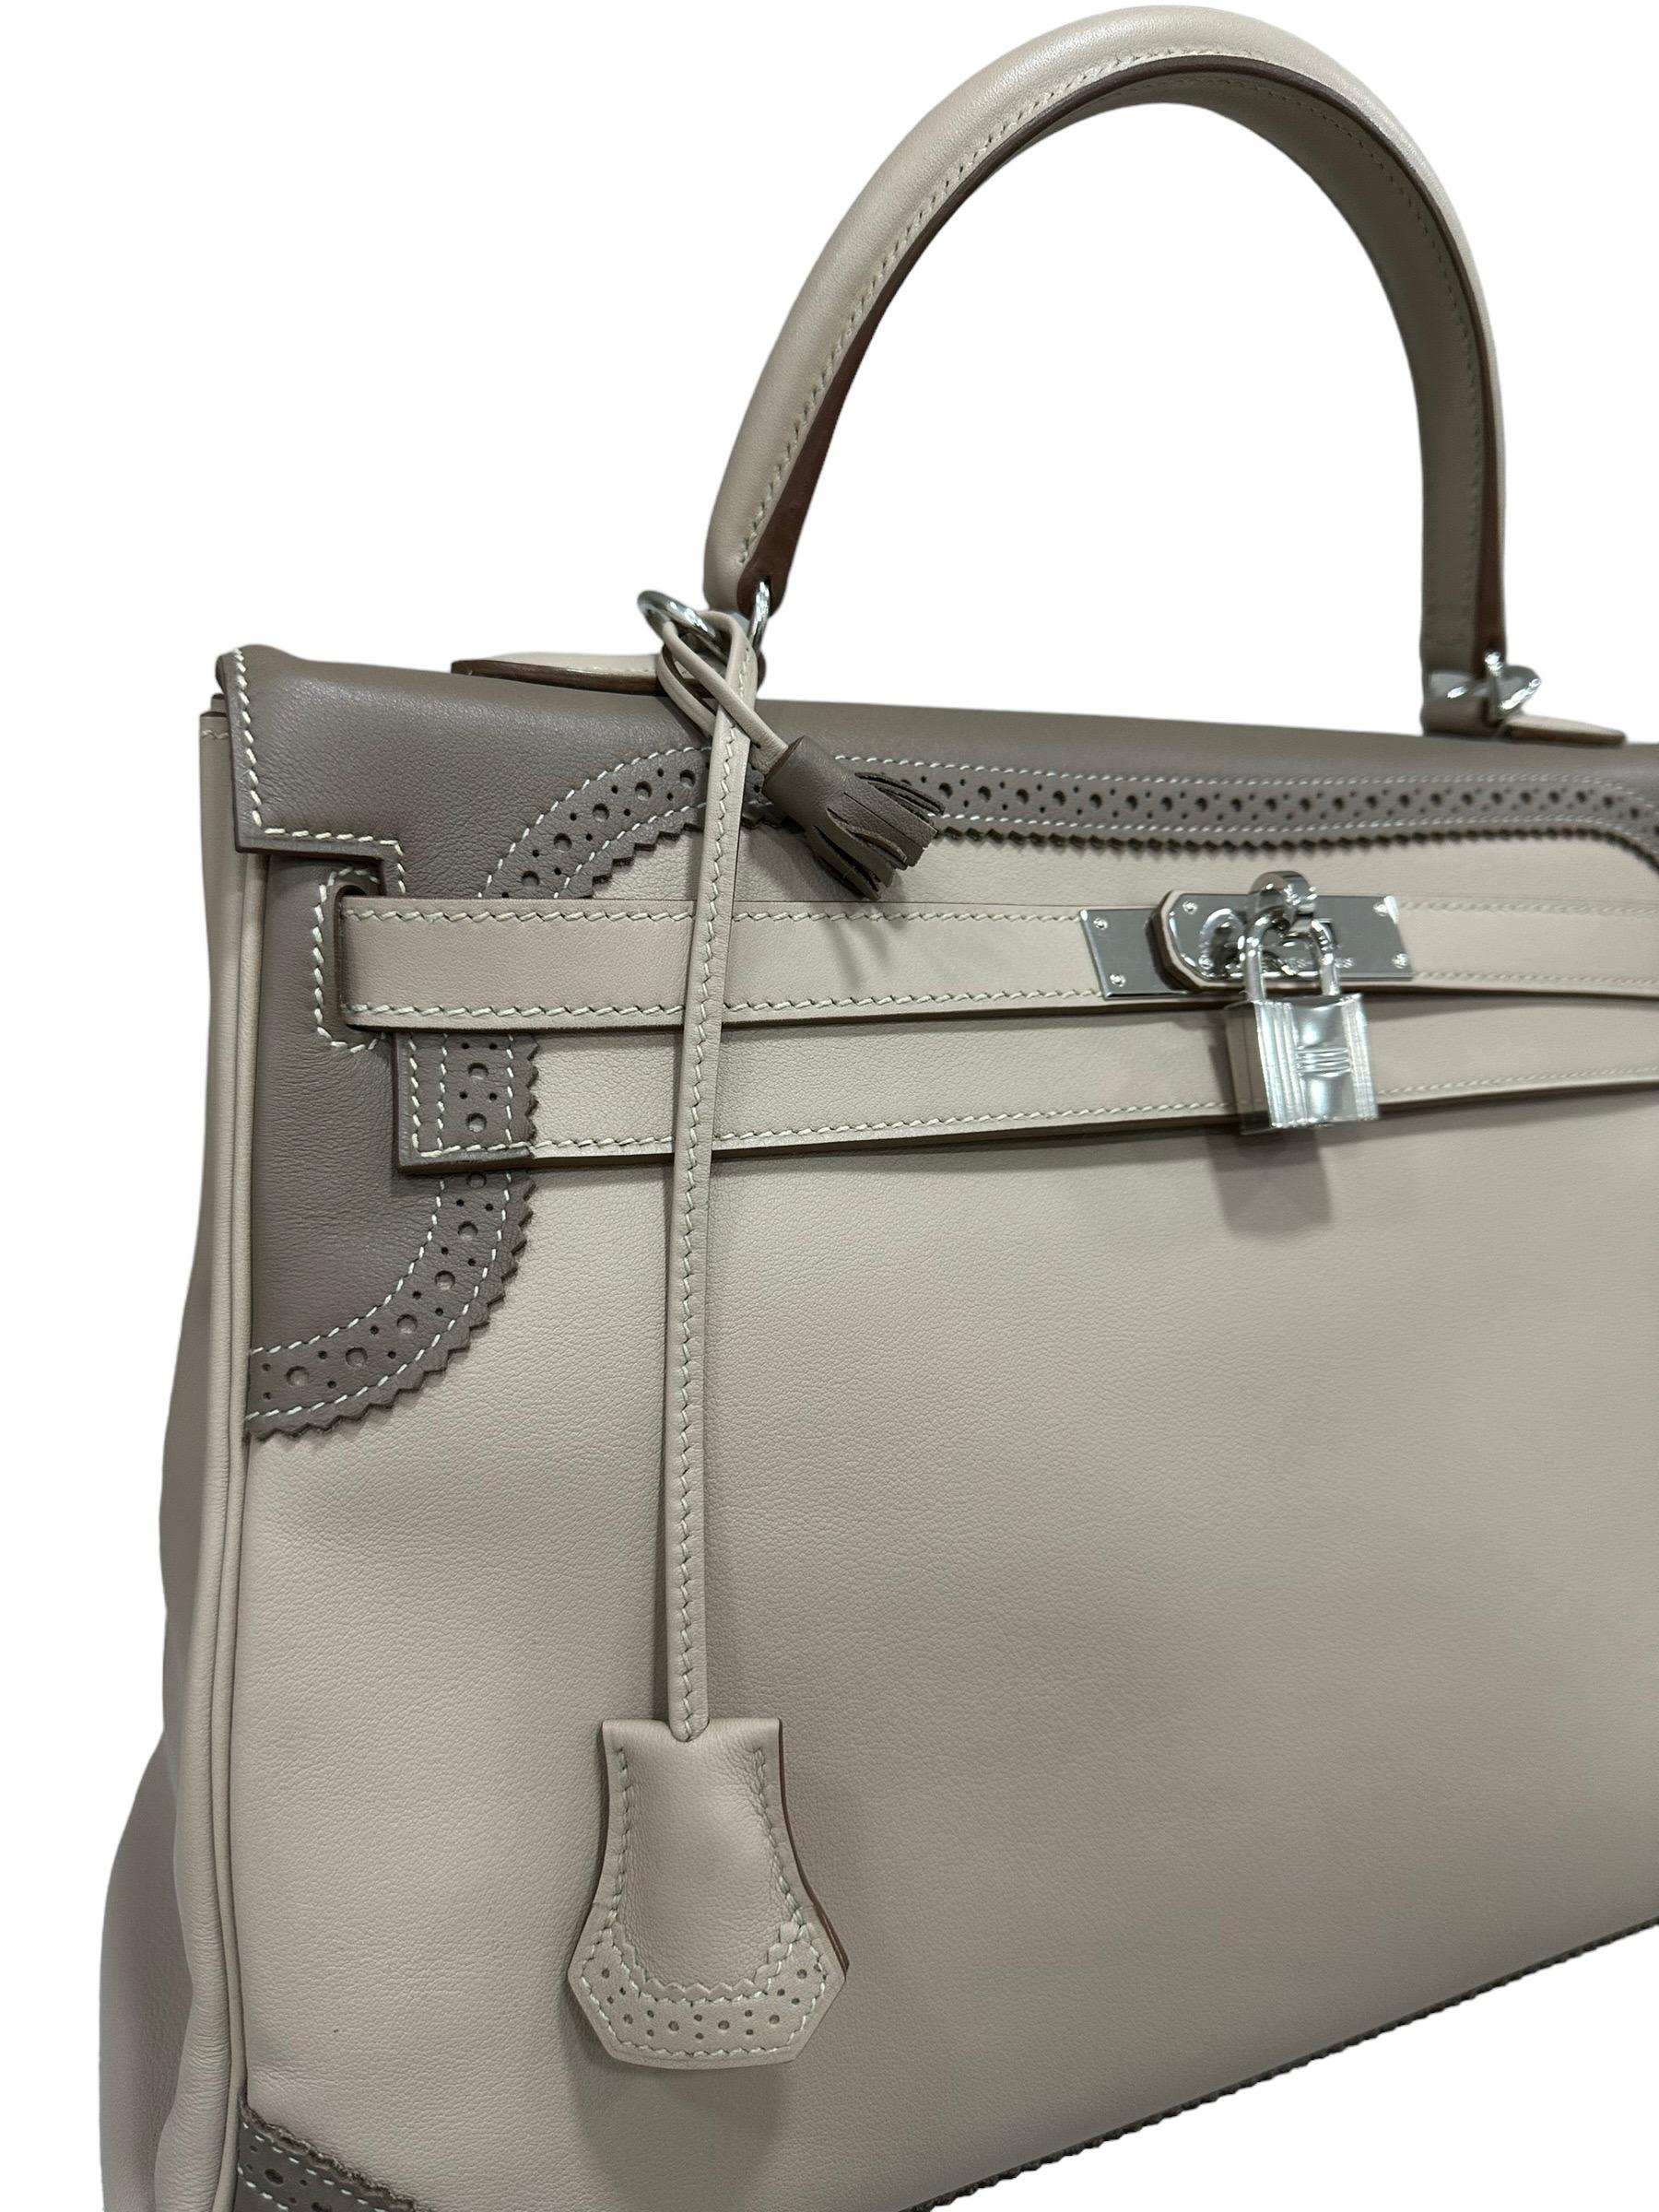 2012 Hermès Kelly 35 Ghillies Evercalf Craie/Taupe (Grau) im Angebot